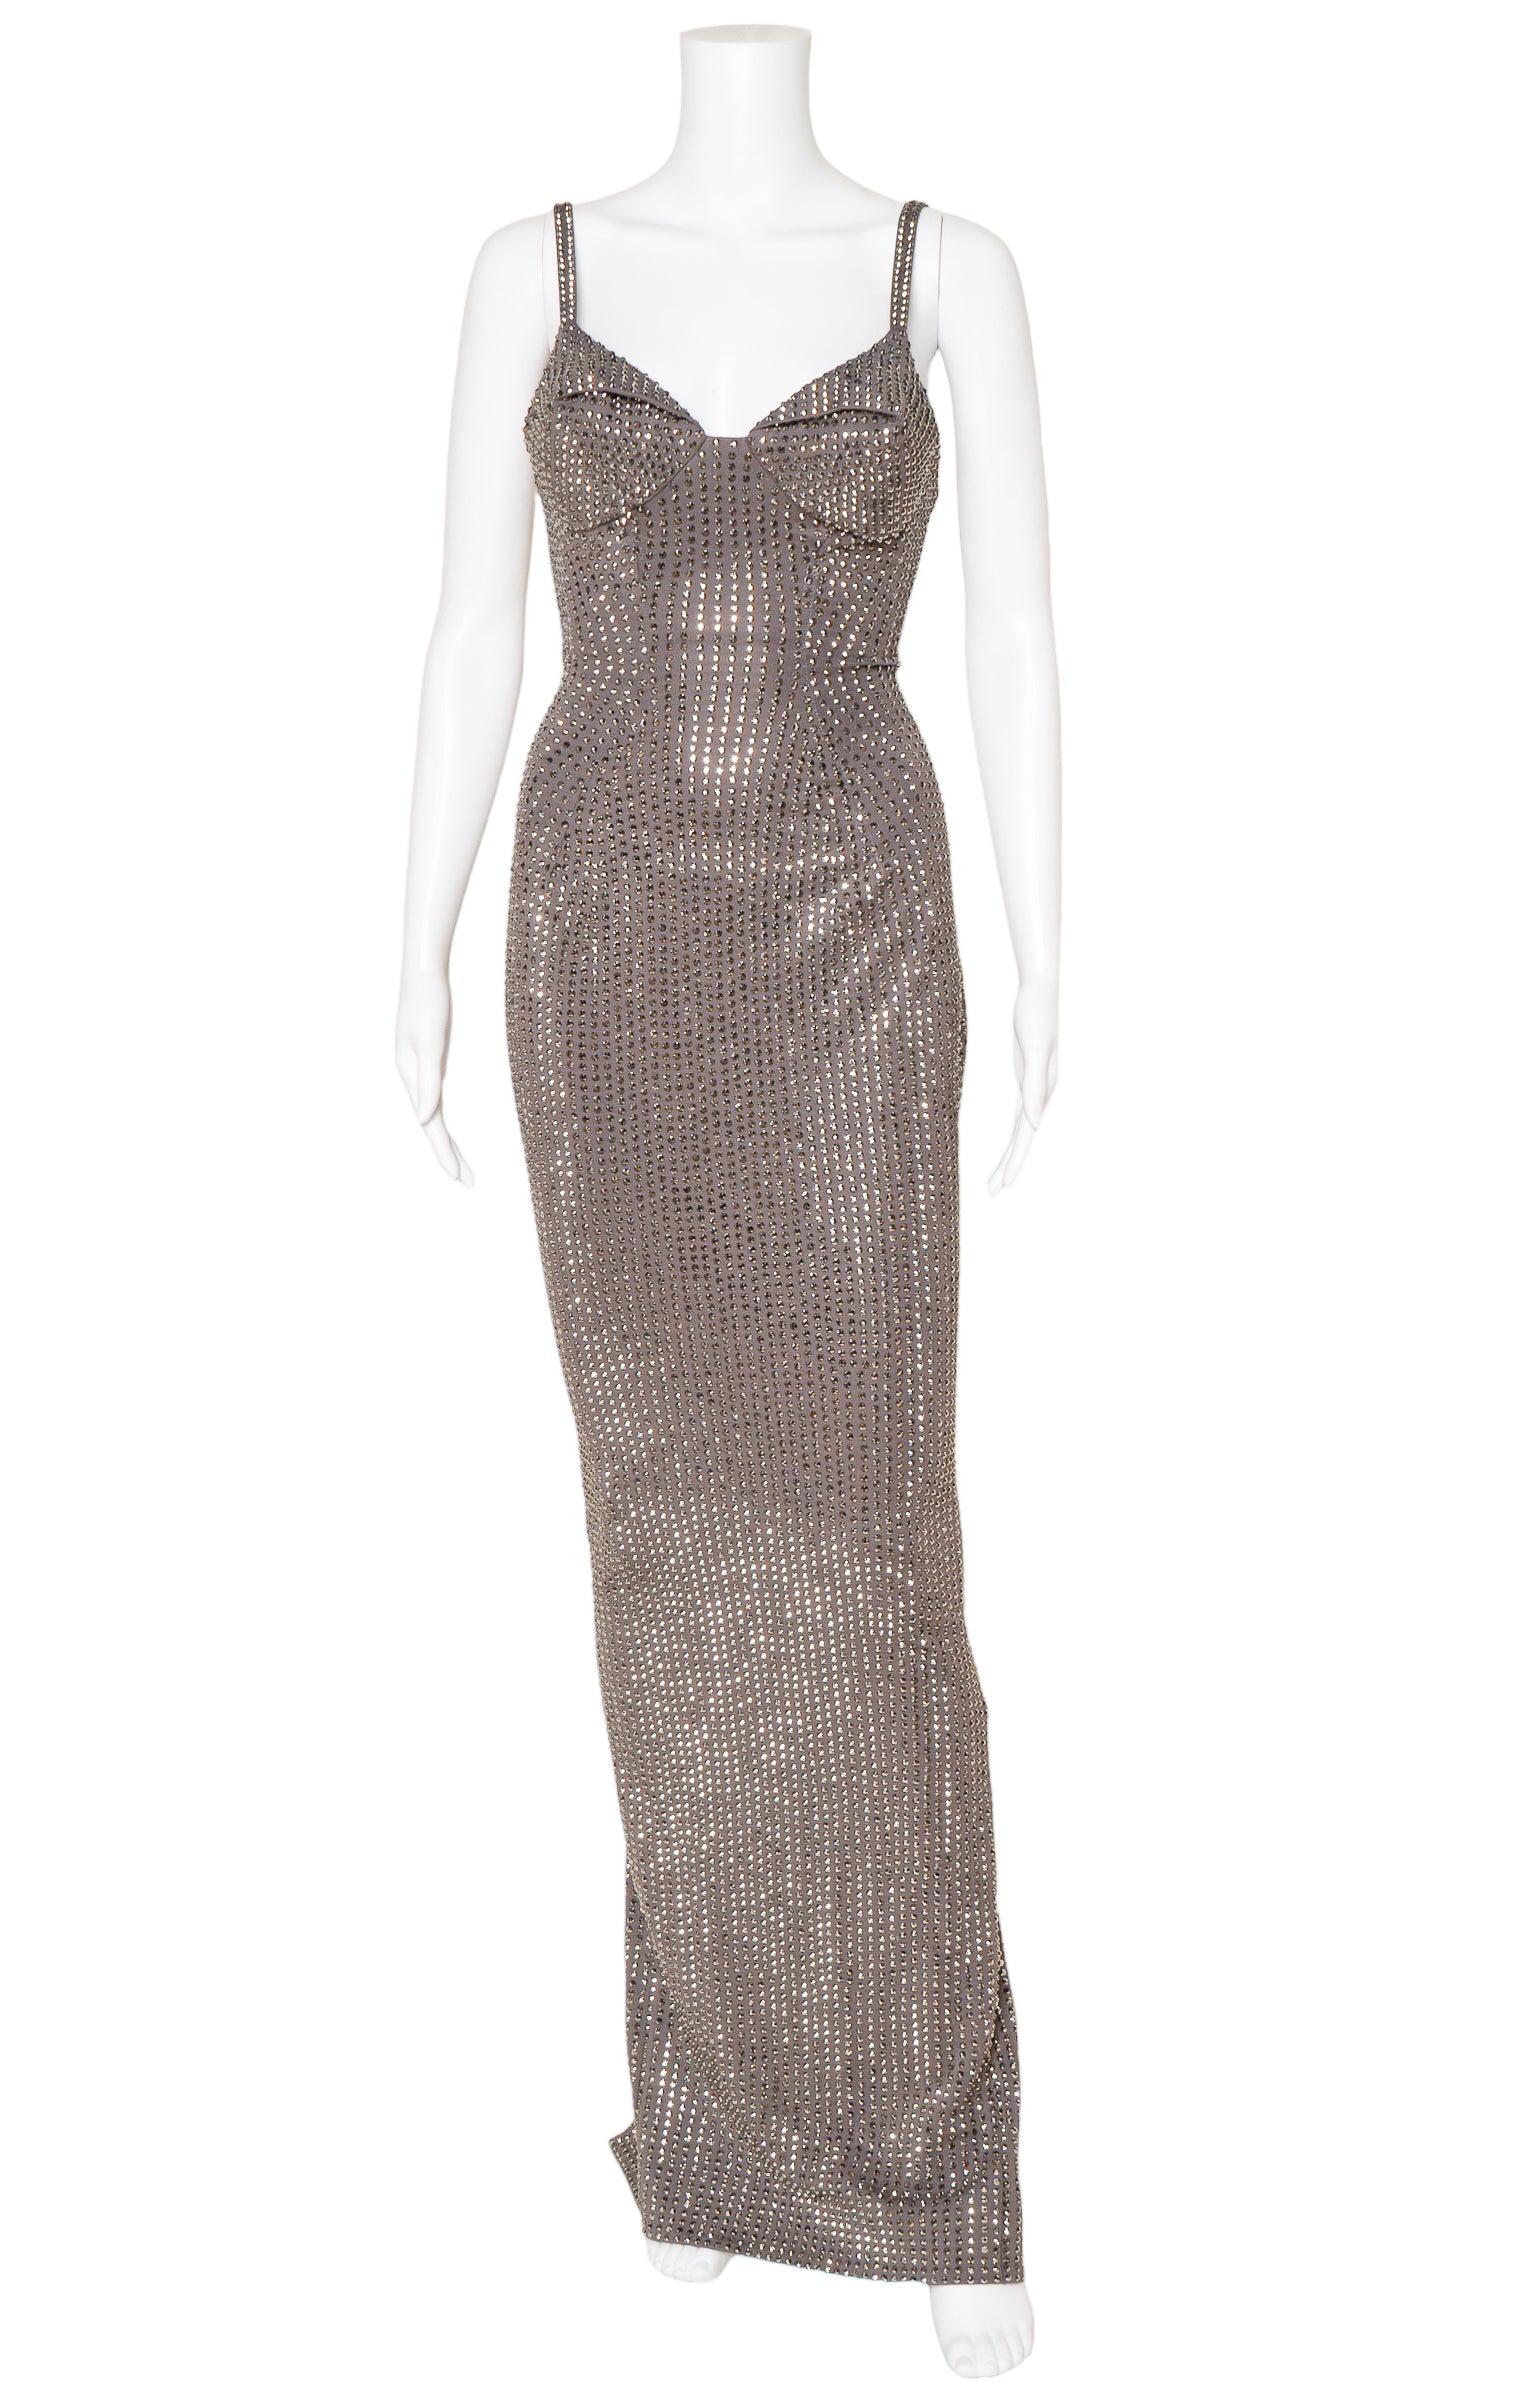 AREA Dress Size: No size tags, fits like XS